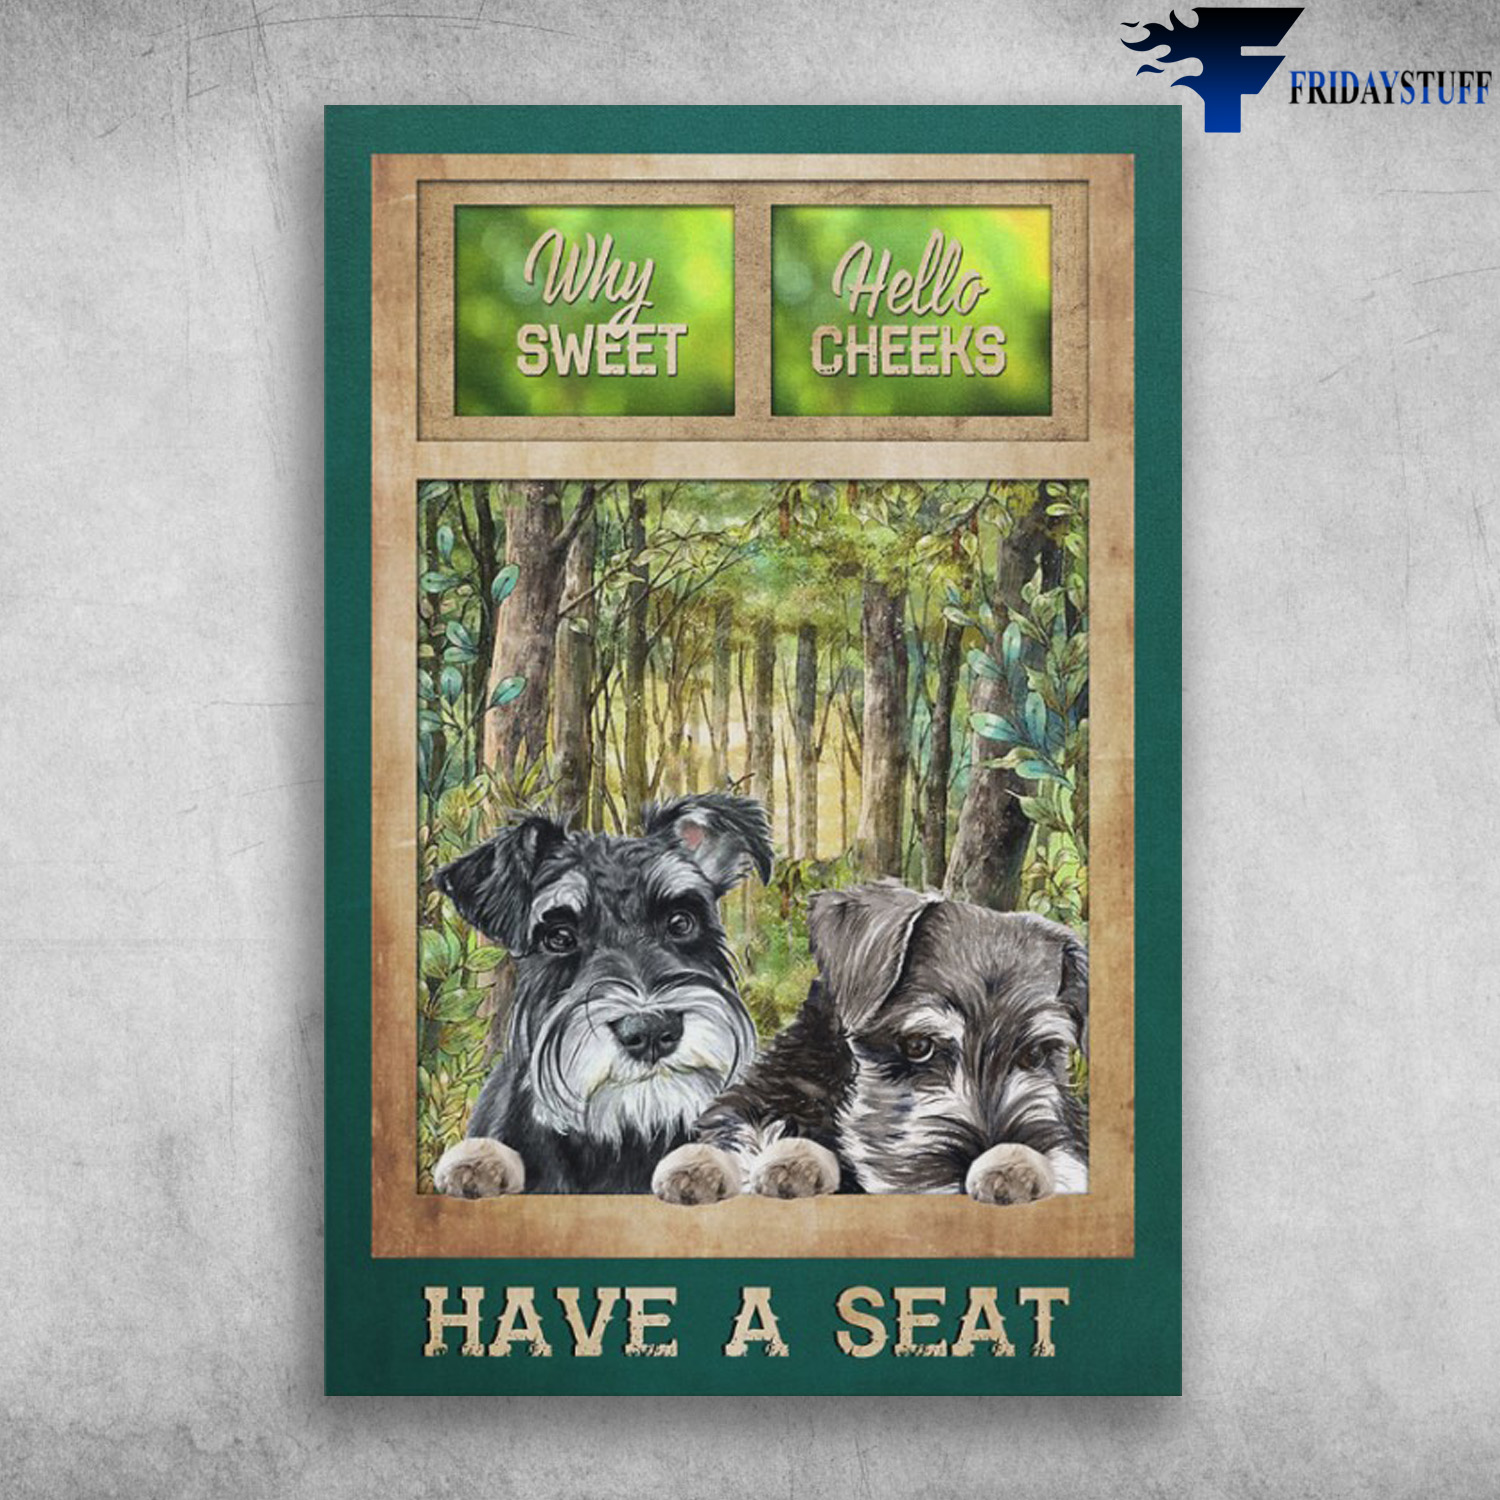 Schnauzer Dog - Why Sweet, Hello Cheeks, Have A Seat